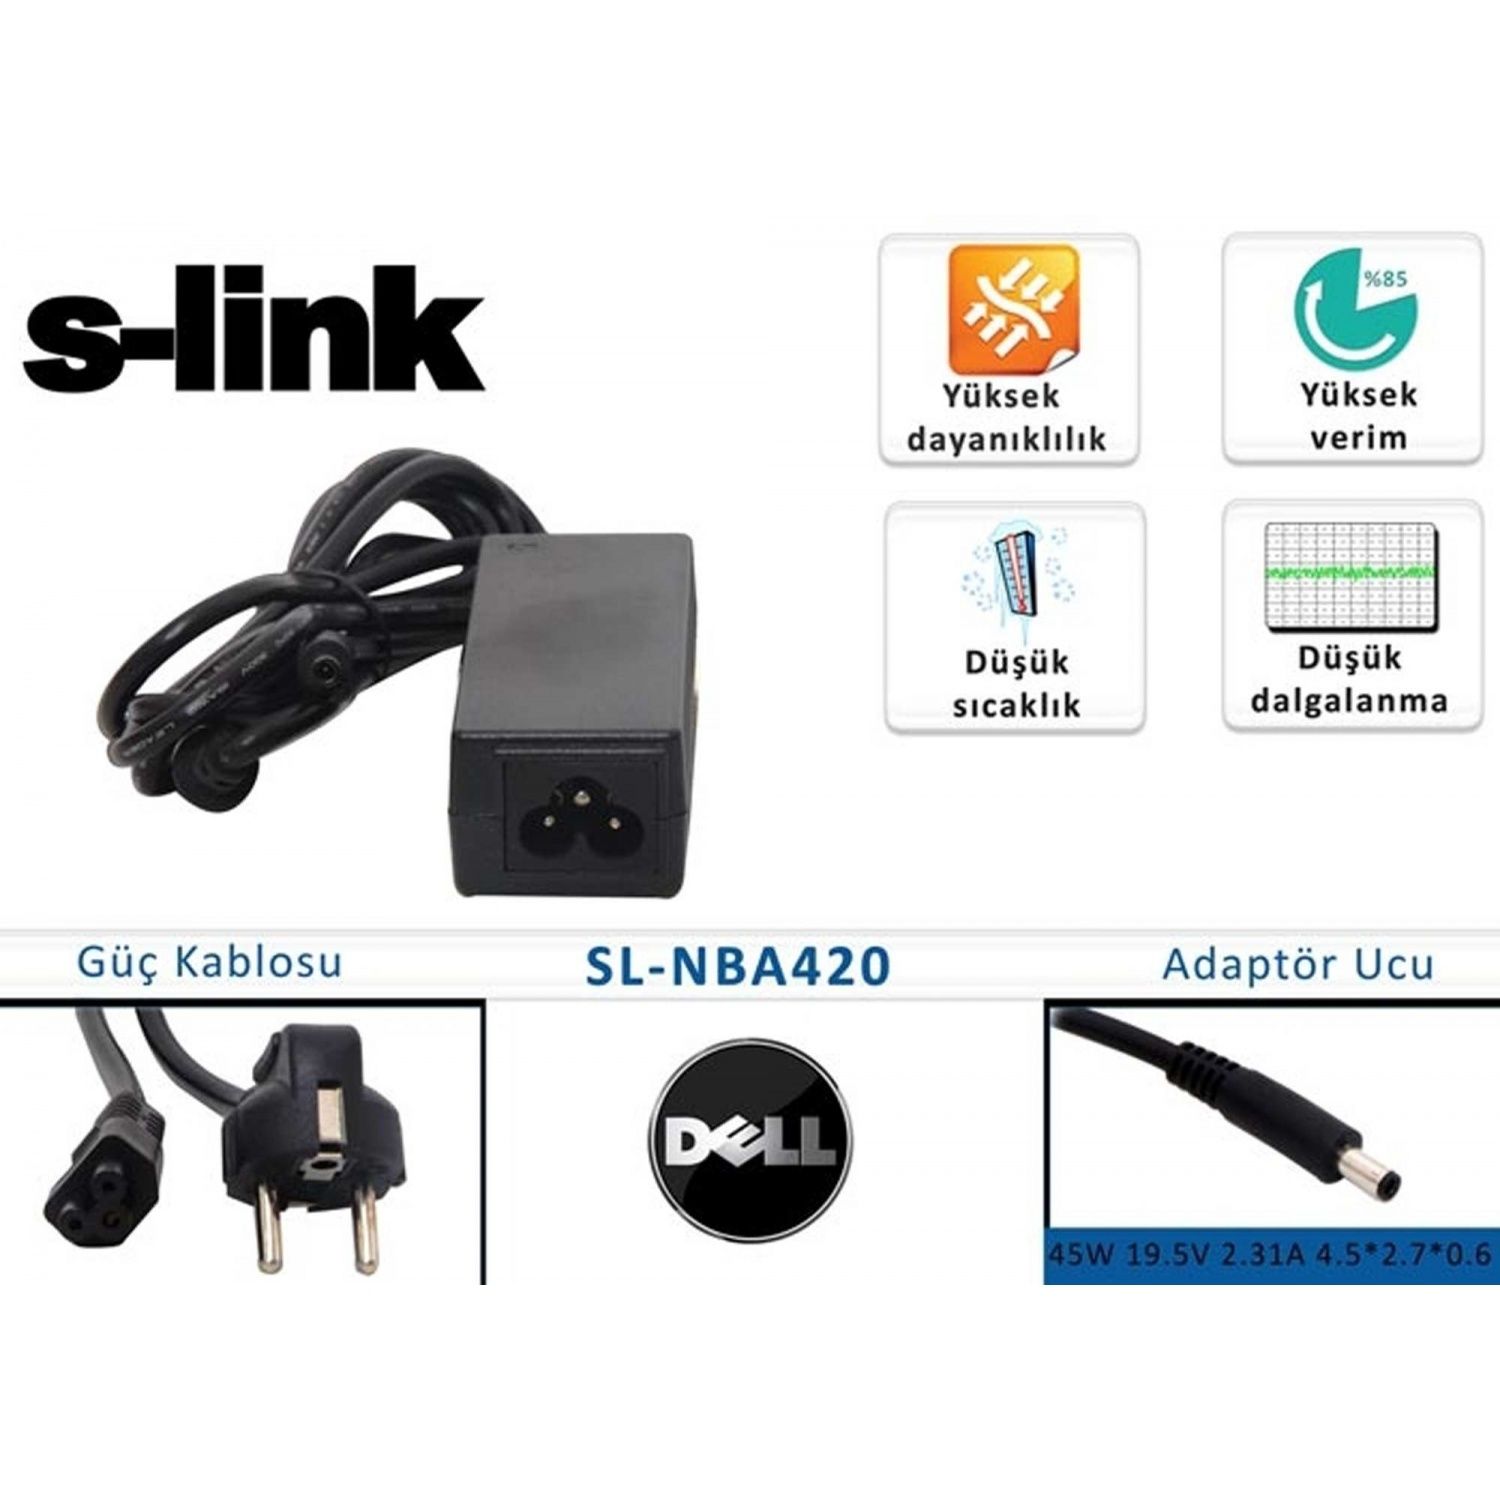 S-Link Sl-Nba420 45W 19.5V 2.31A 4.5-2.7-0.6 Dell Notebook Adapt